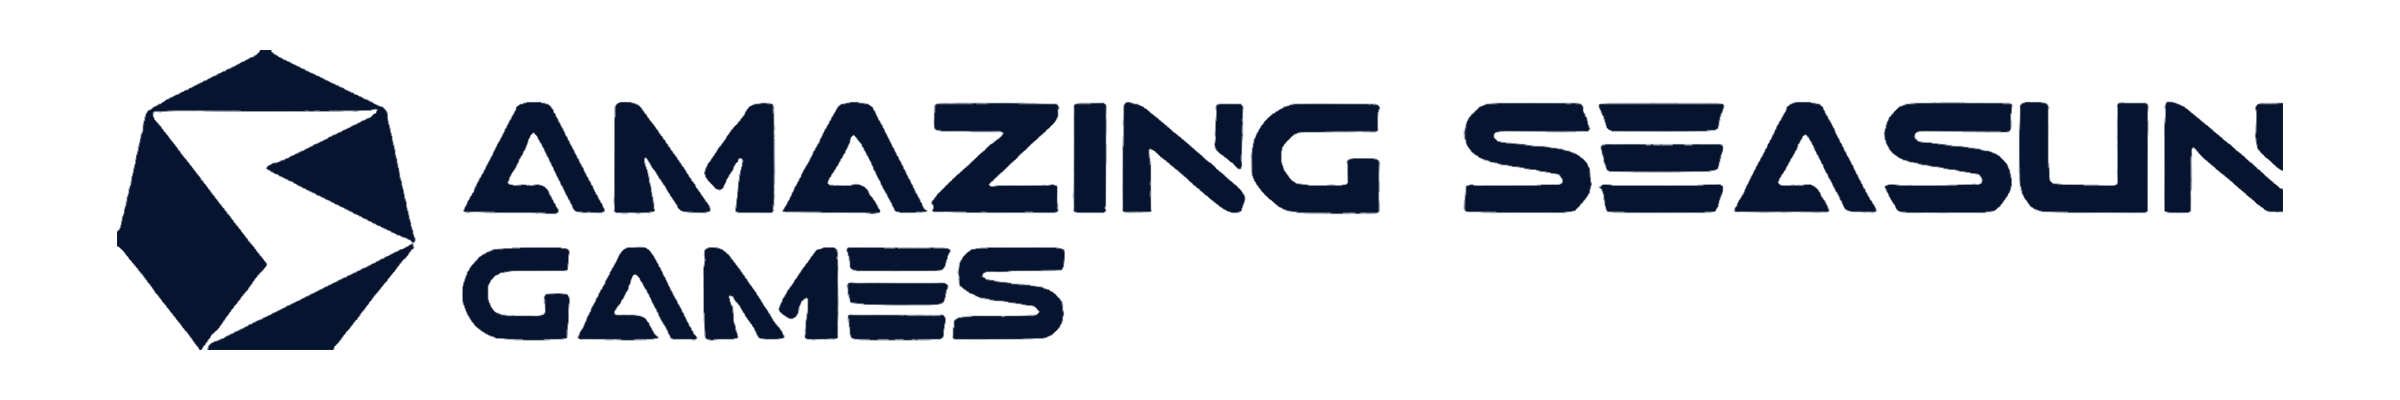 amazing-seasun-games-logo